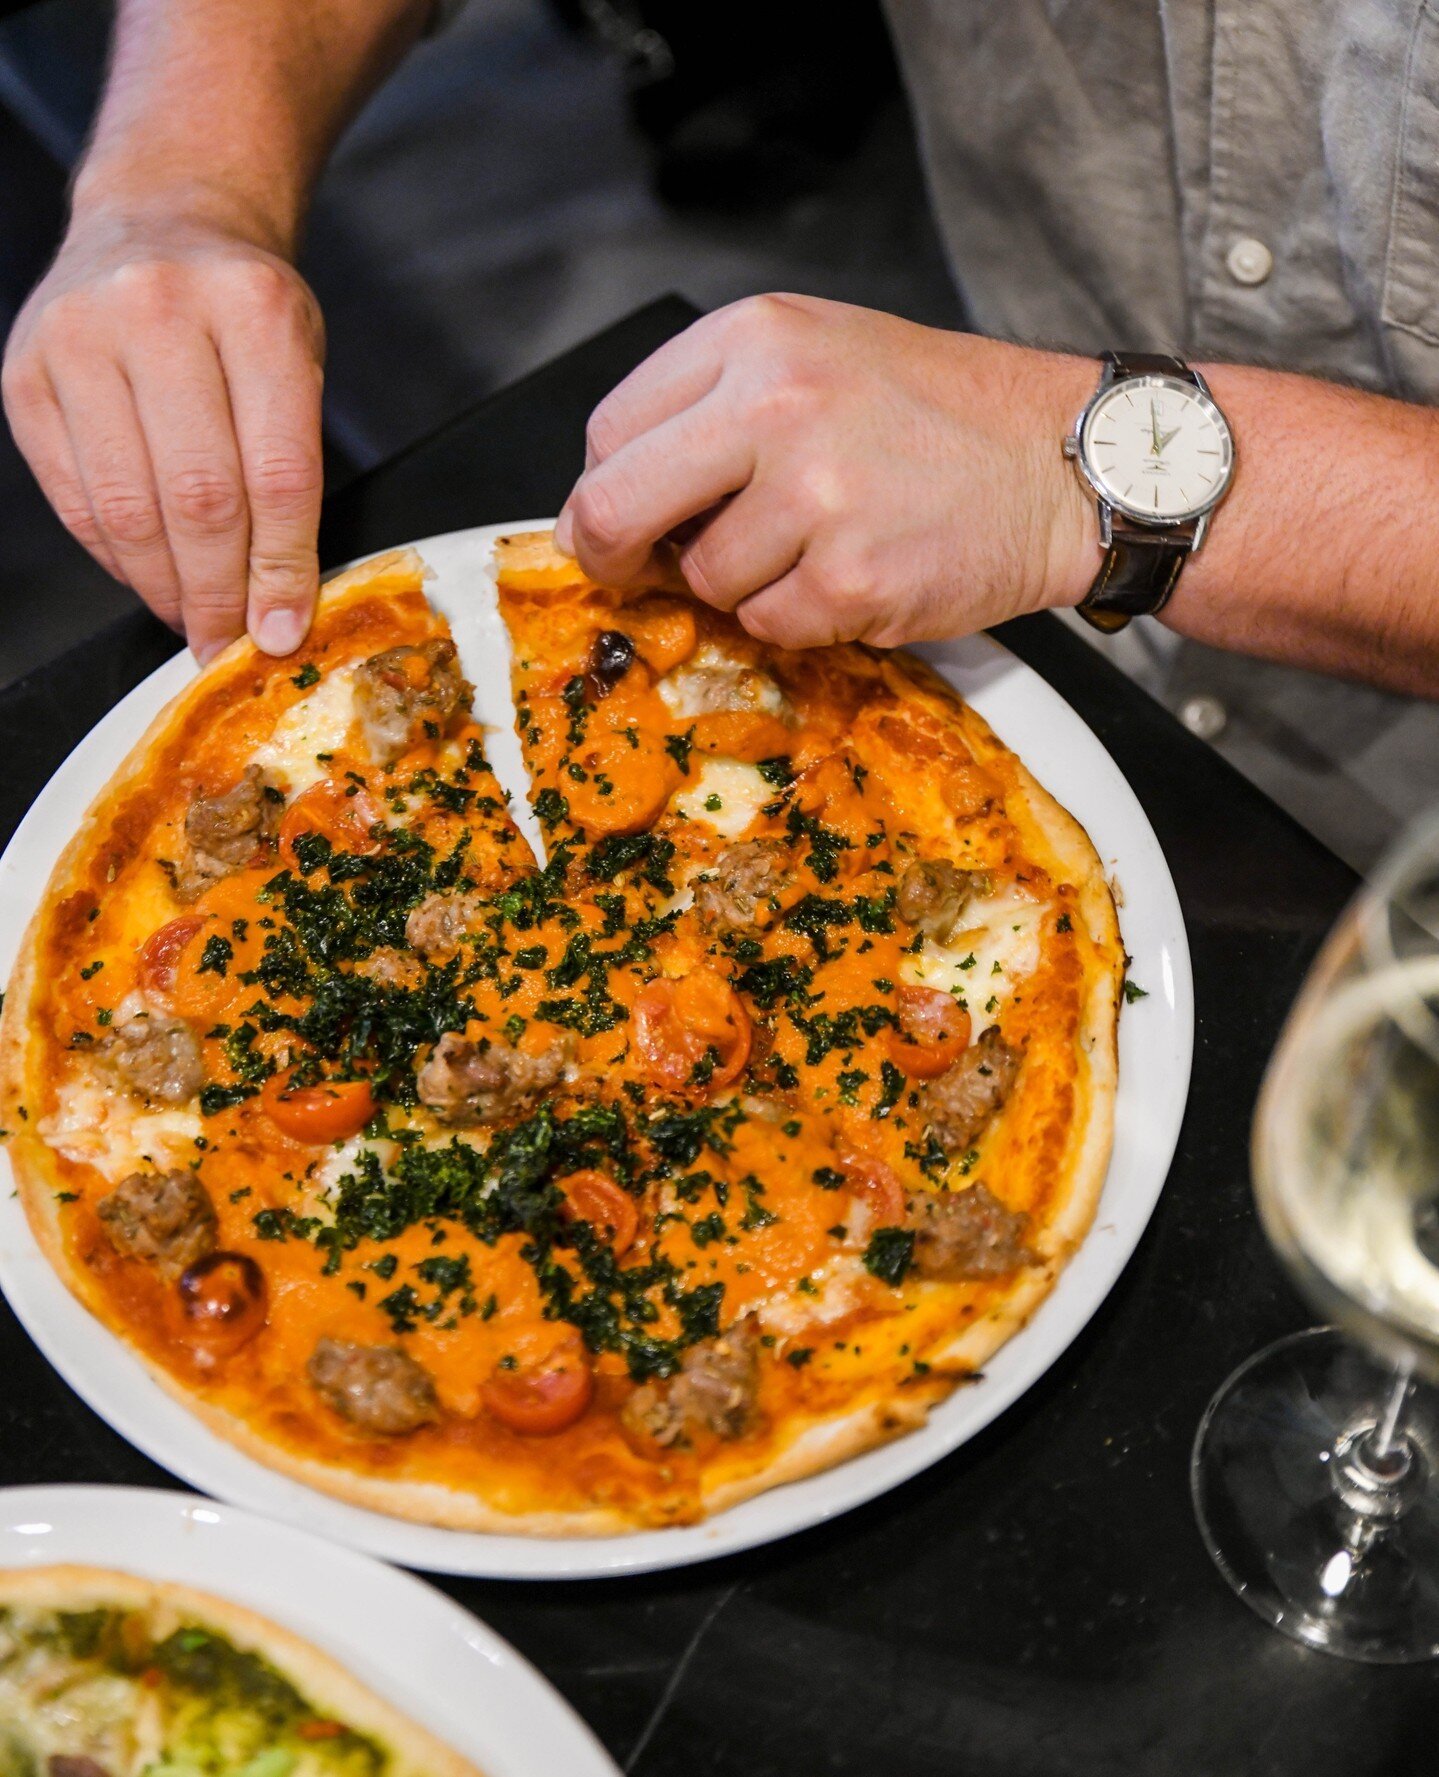 Albondigas 🍕 ⁠
⁠
Spanish meatballs, asiago, roasted cherry tomatoes, chilli, oregano &amp; parsley.⁠
⁠
#MeltHydePark #Albondigos #Pizza #Tapas⁠